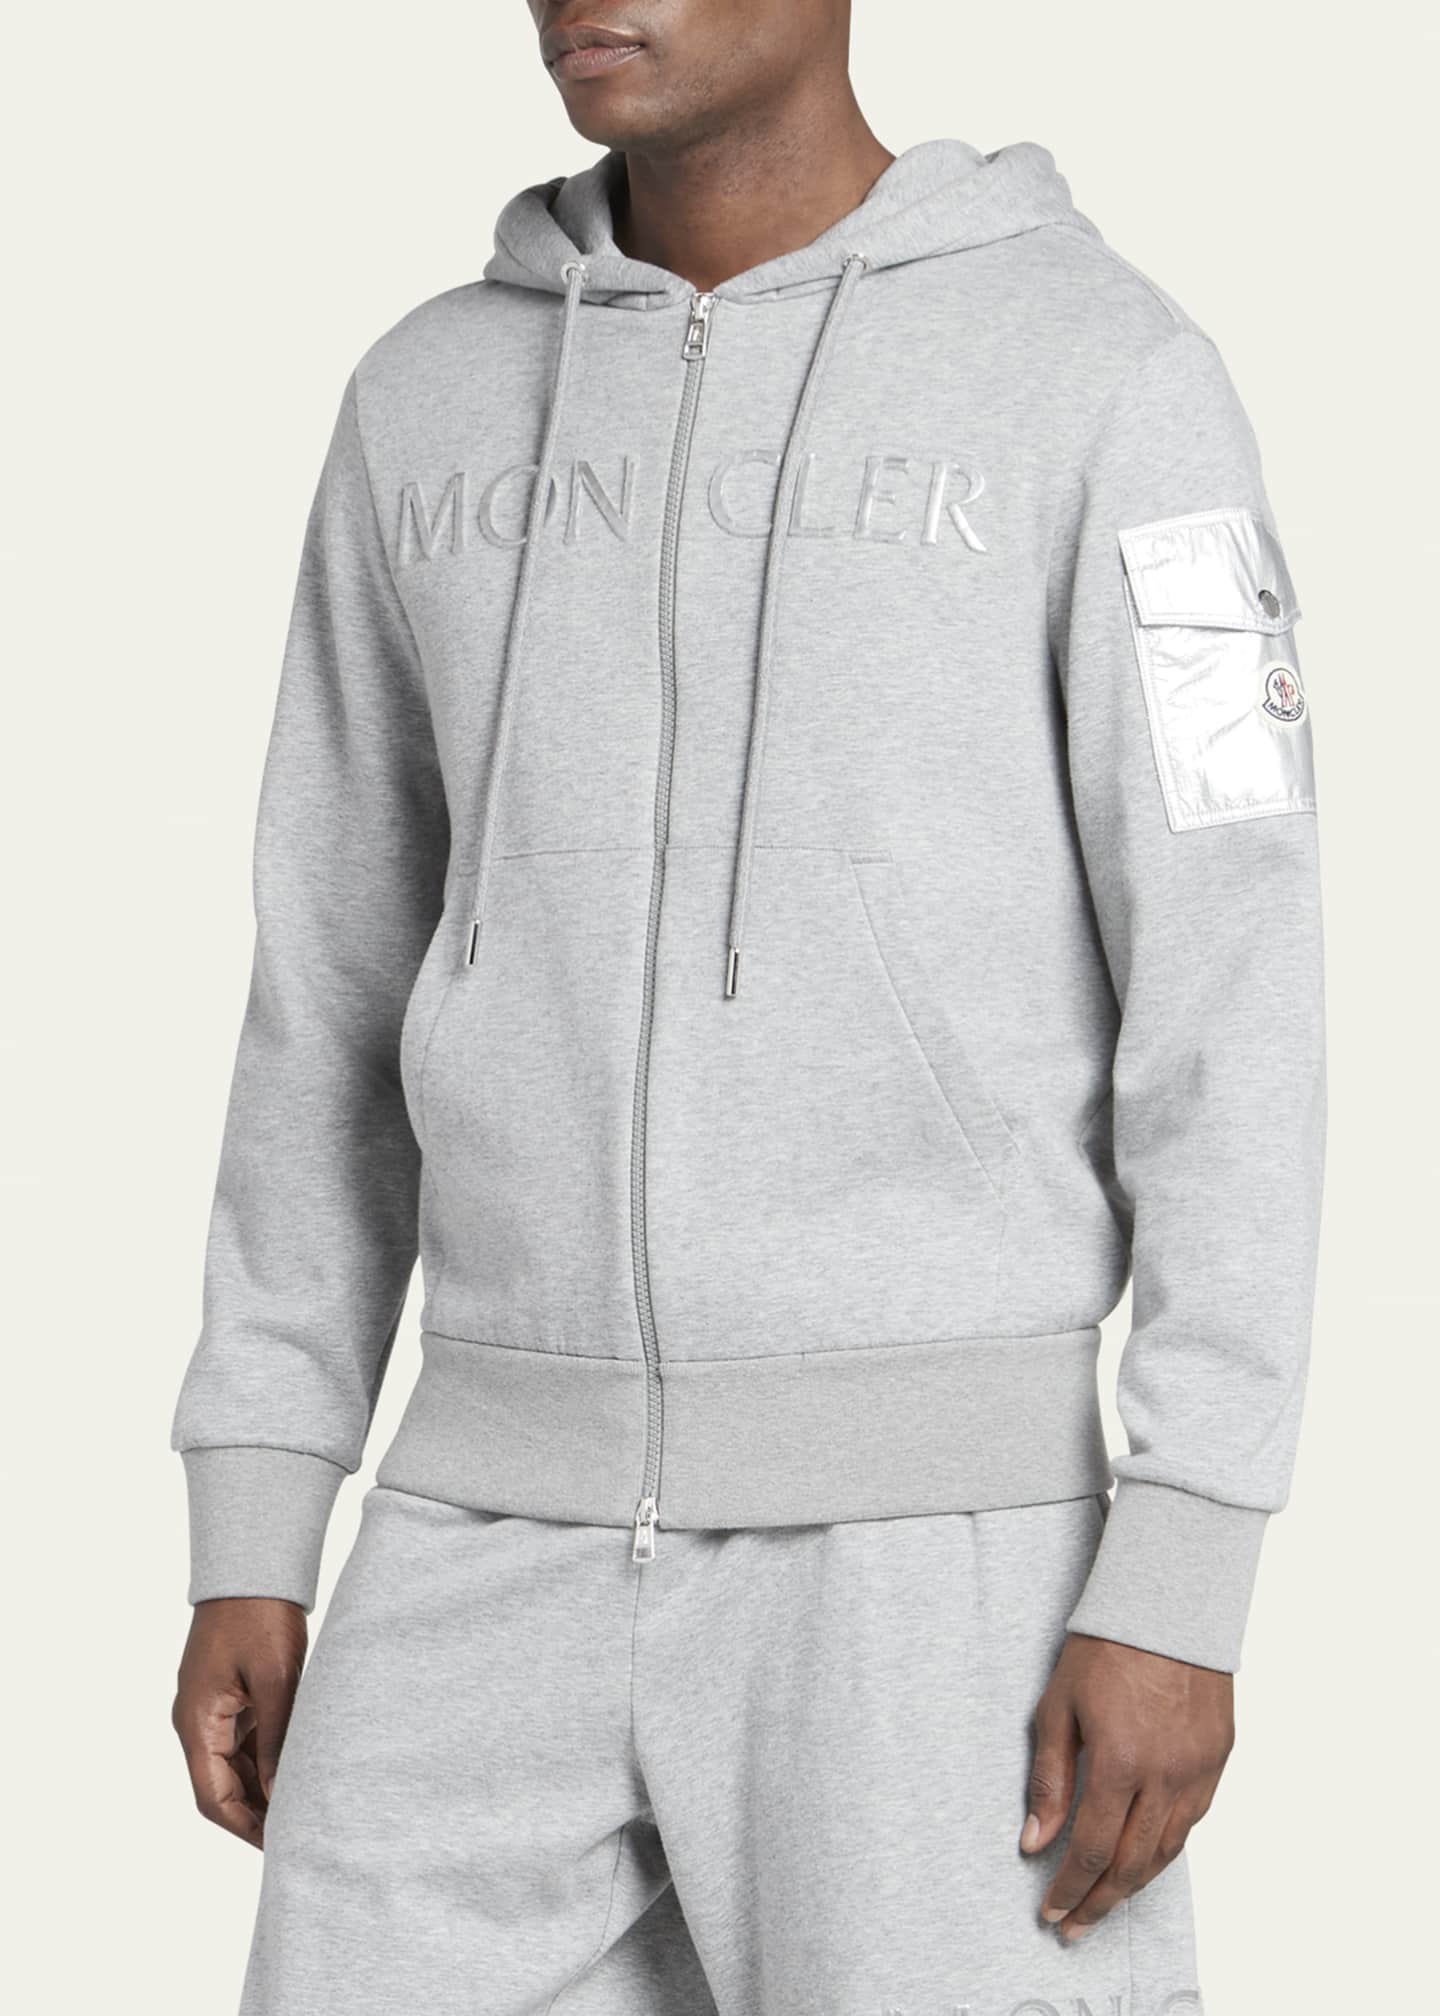 Moncler Men's Cotton Terry Embroidered Logo Zip Hoodie - Bergdorf